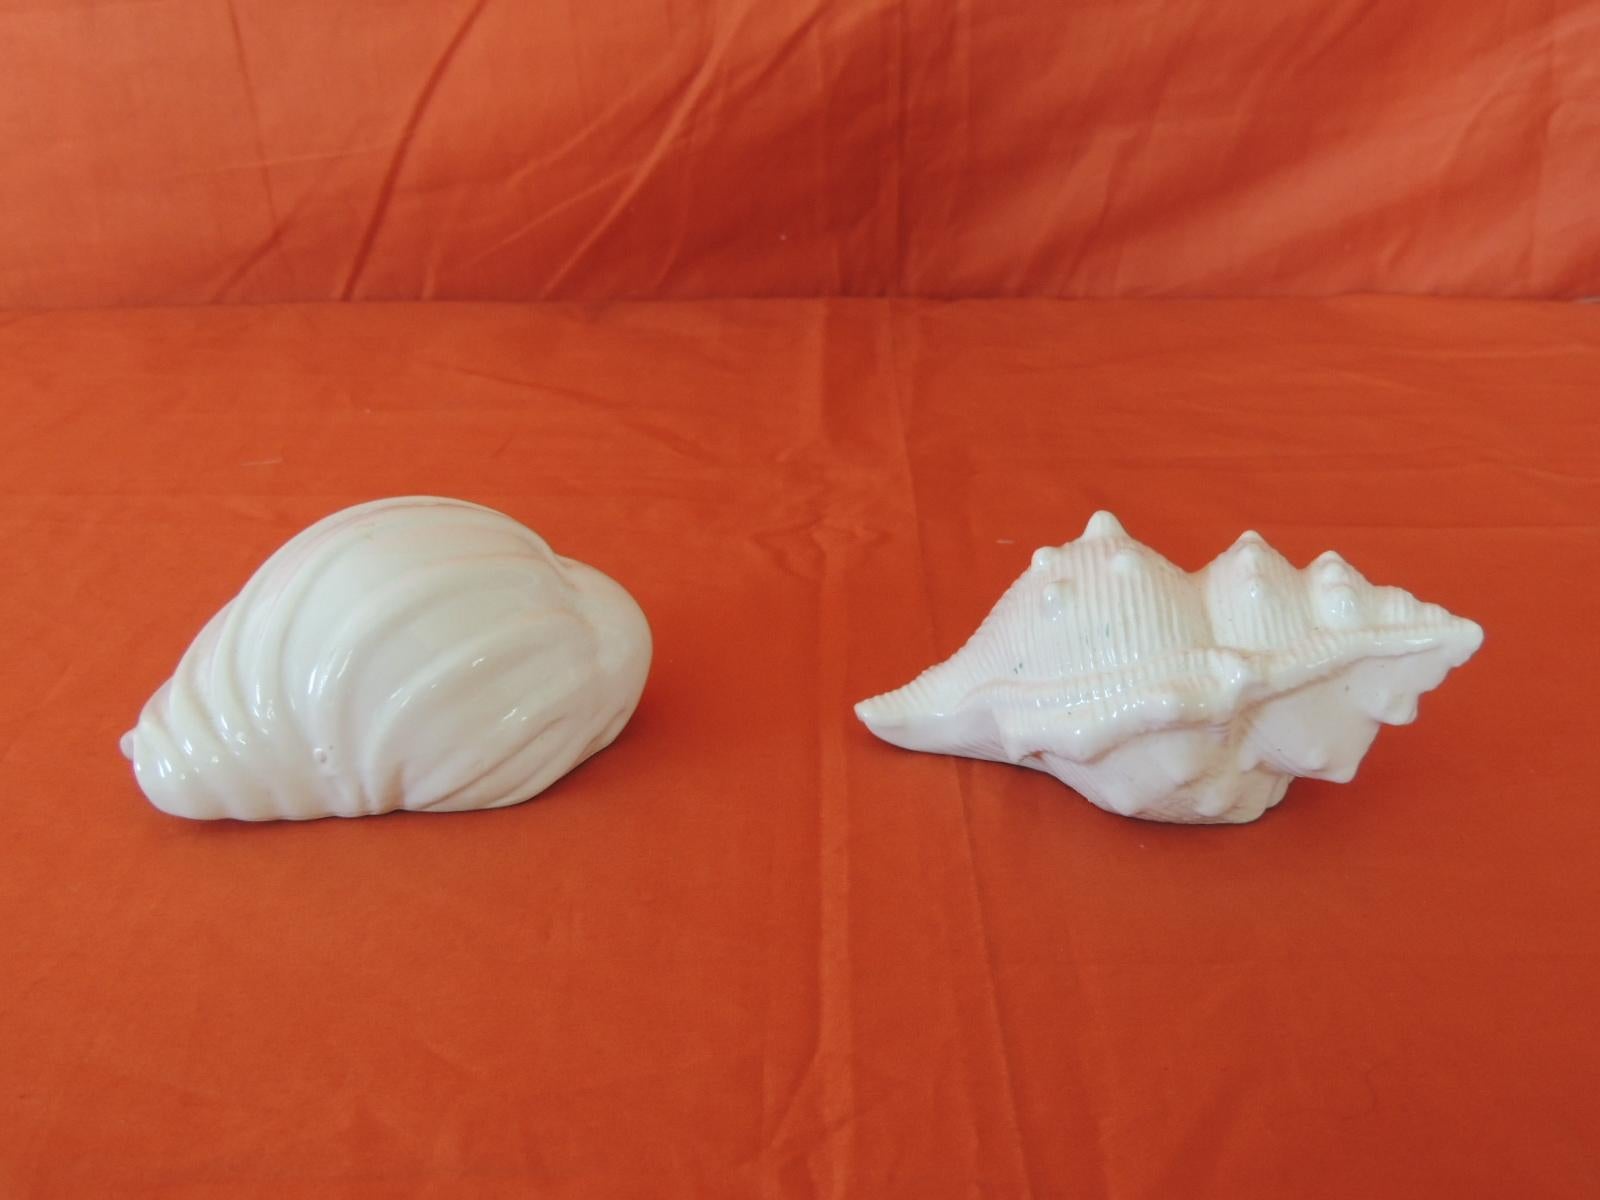 Large Pair of Vintage White Seashells Salt and Pepper Shakers
Vintage white seashells salt and pepper shakers in white ceramic in the shape of conchs.
Size: 2 x 4 x 3 
&
 4 x 3 x 3